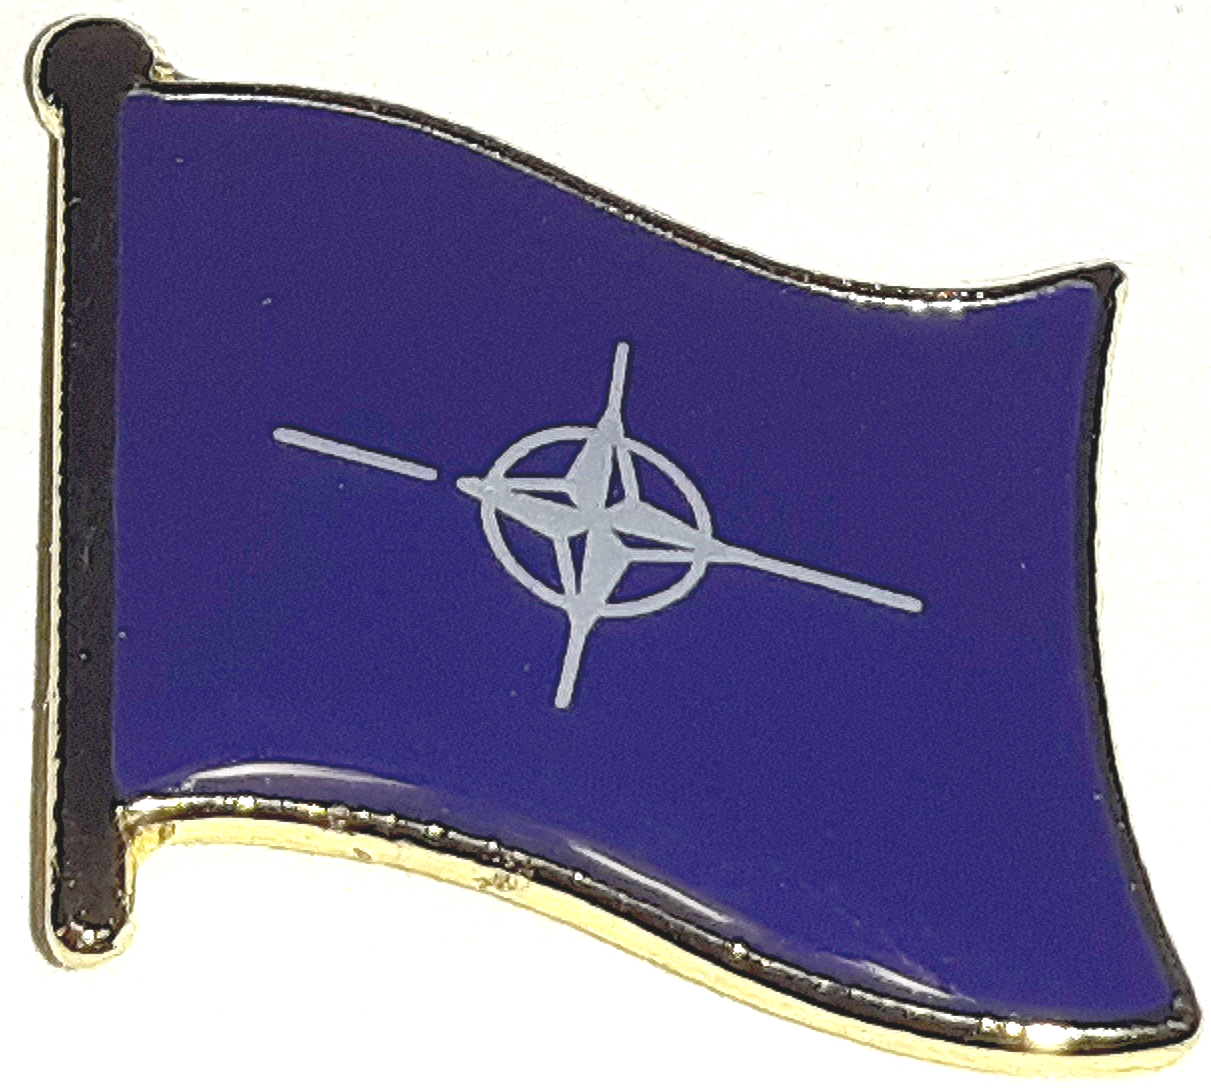 NATO PIN